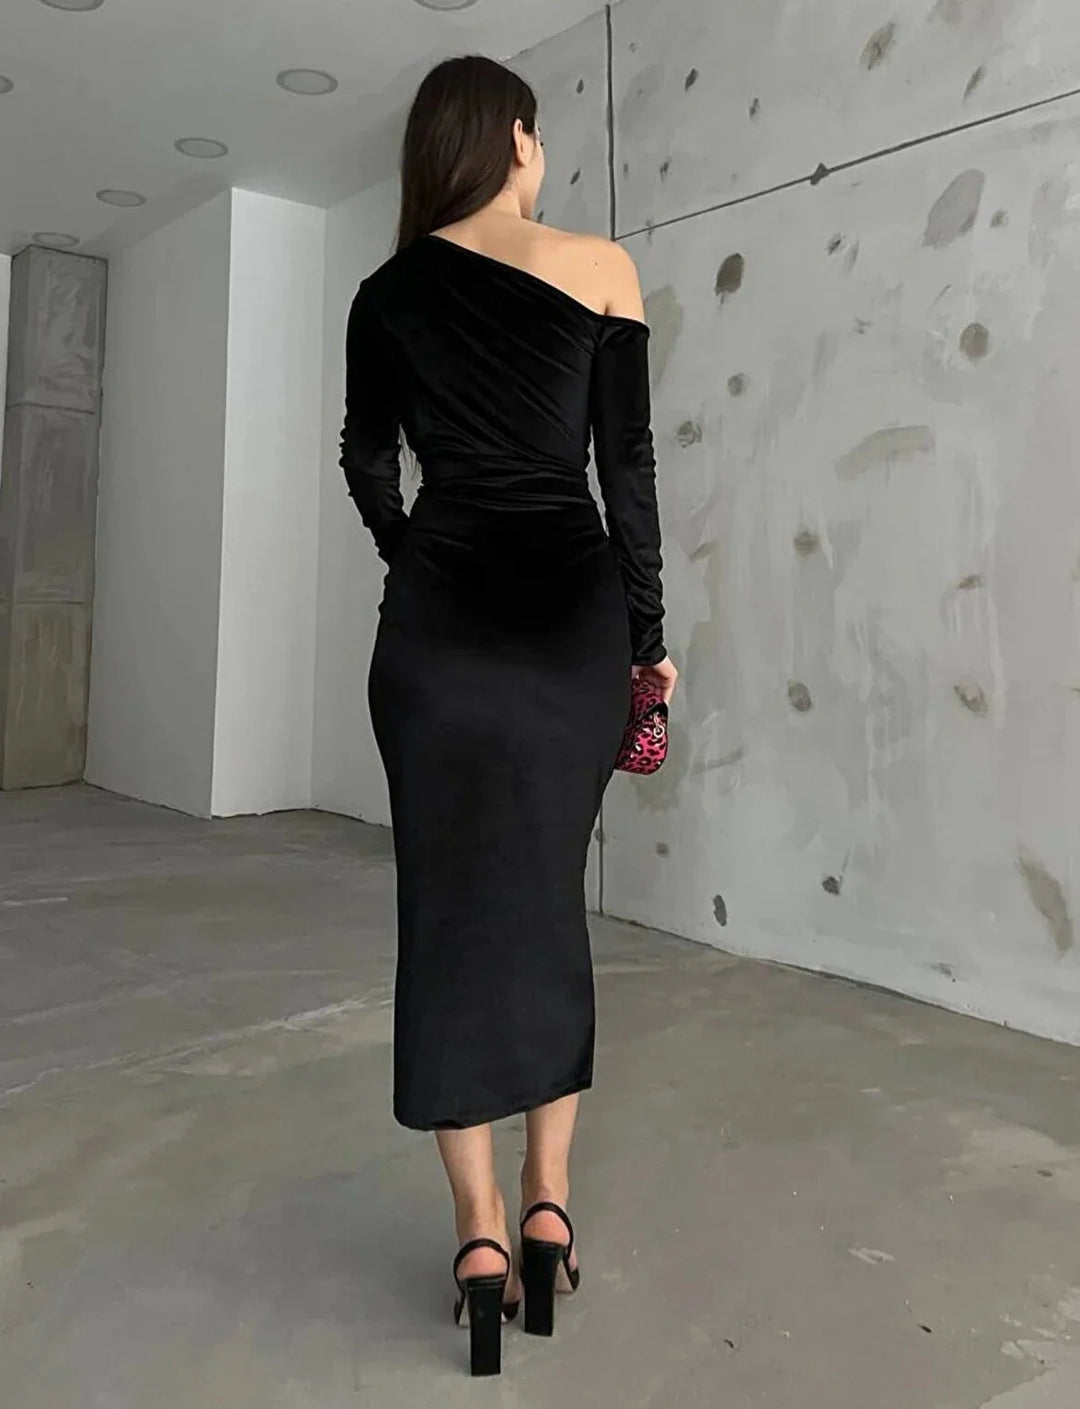 Classy One Shoulder Velvet Dress by BlakWardrob